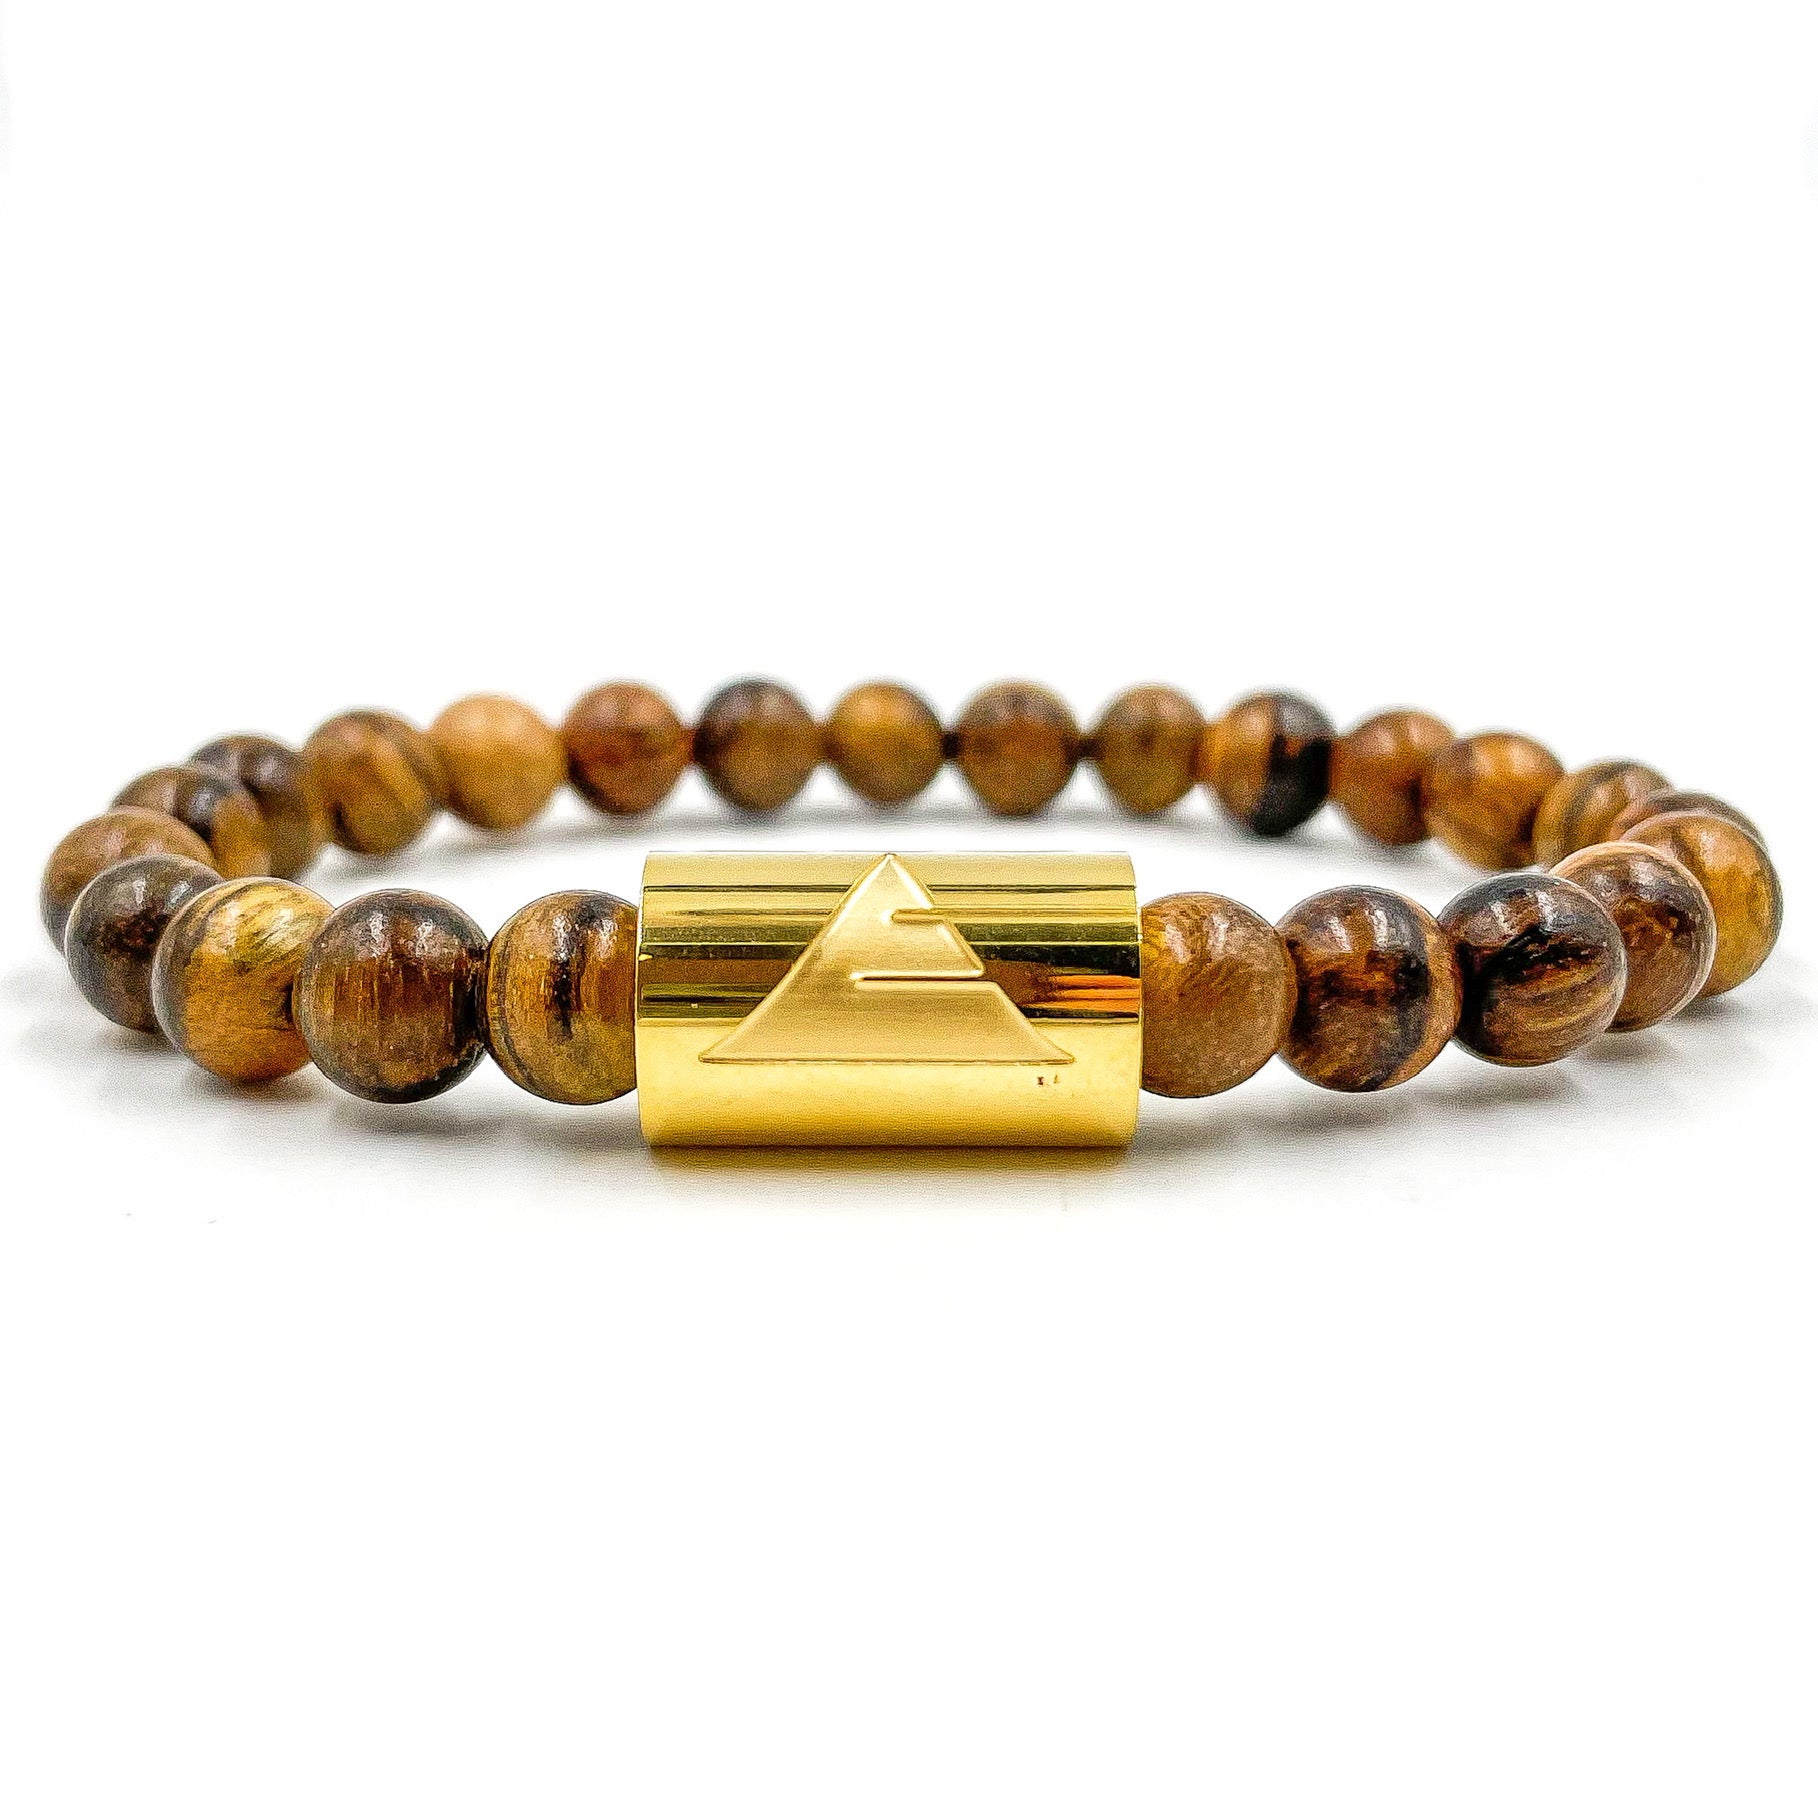 Timber - Dark Brown Sandalwood & Gold Mala Beaded Bracelet